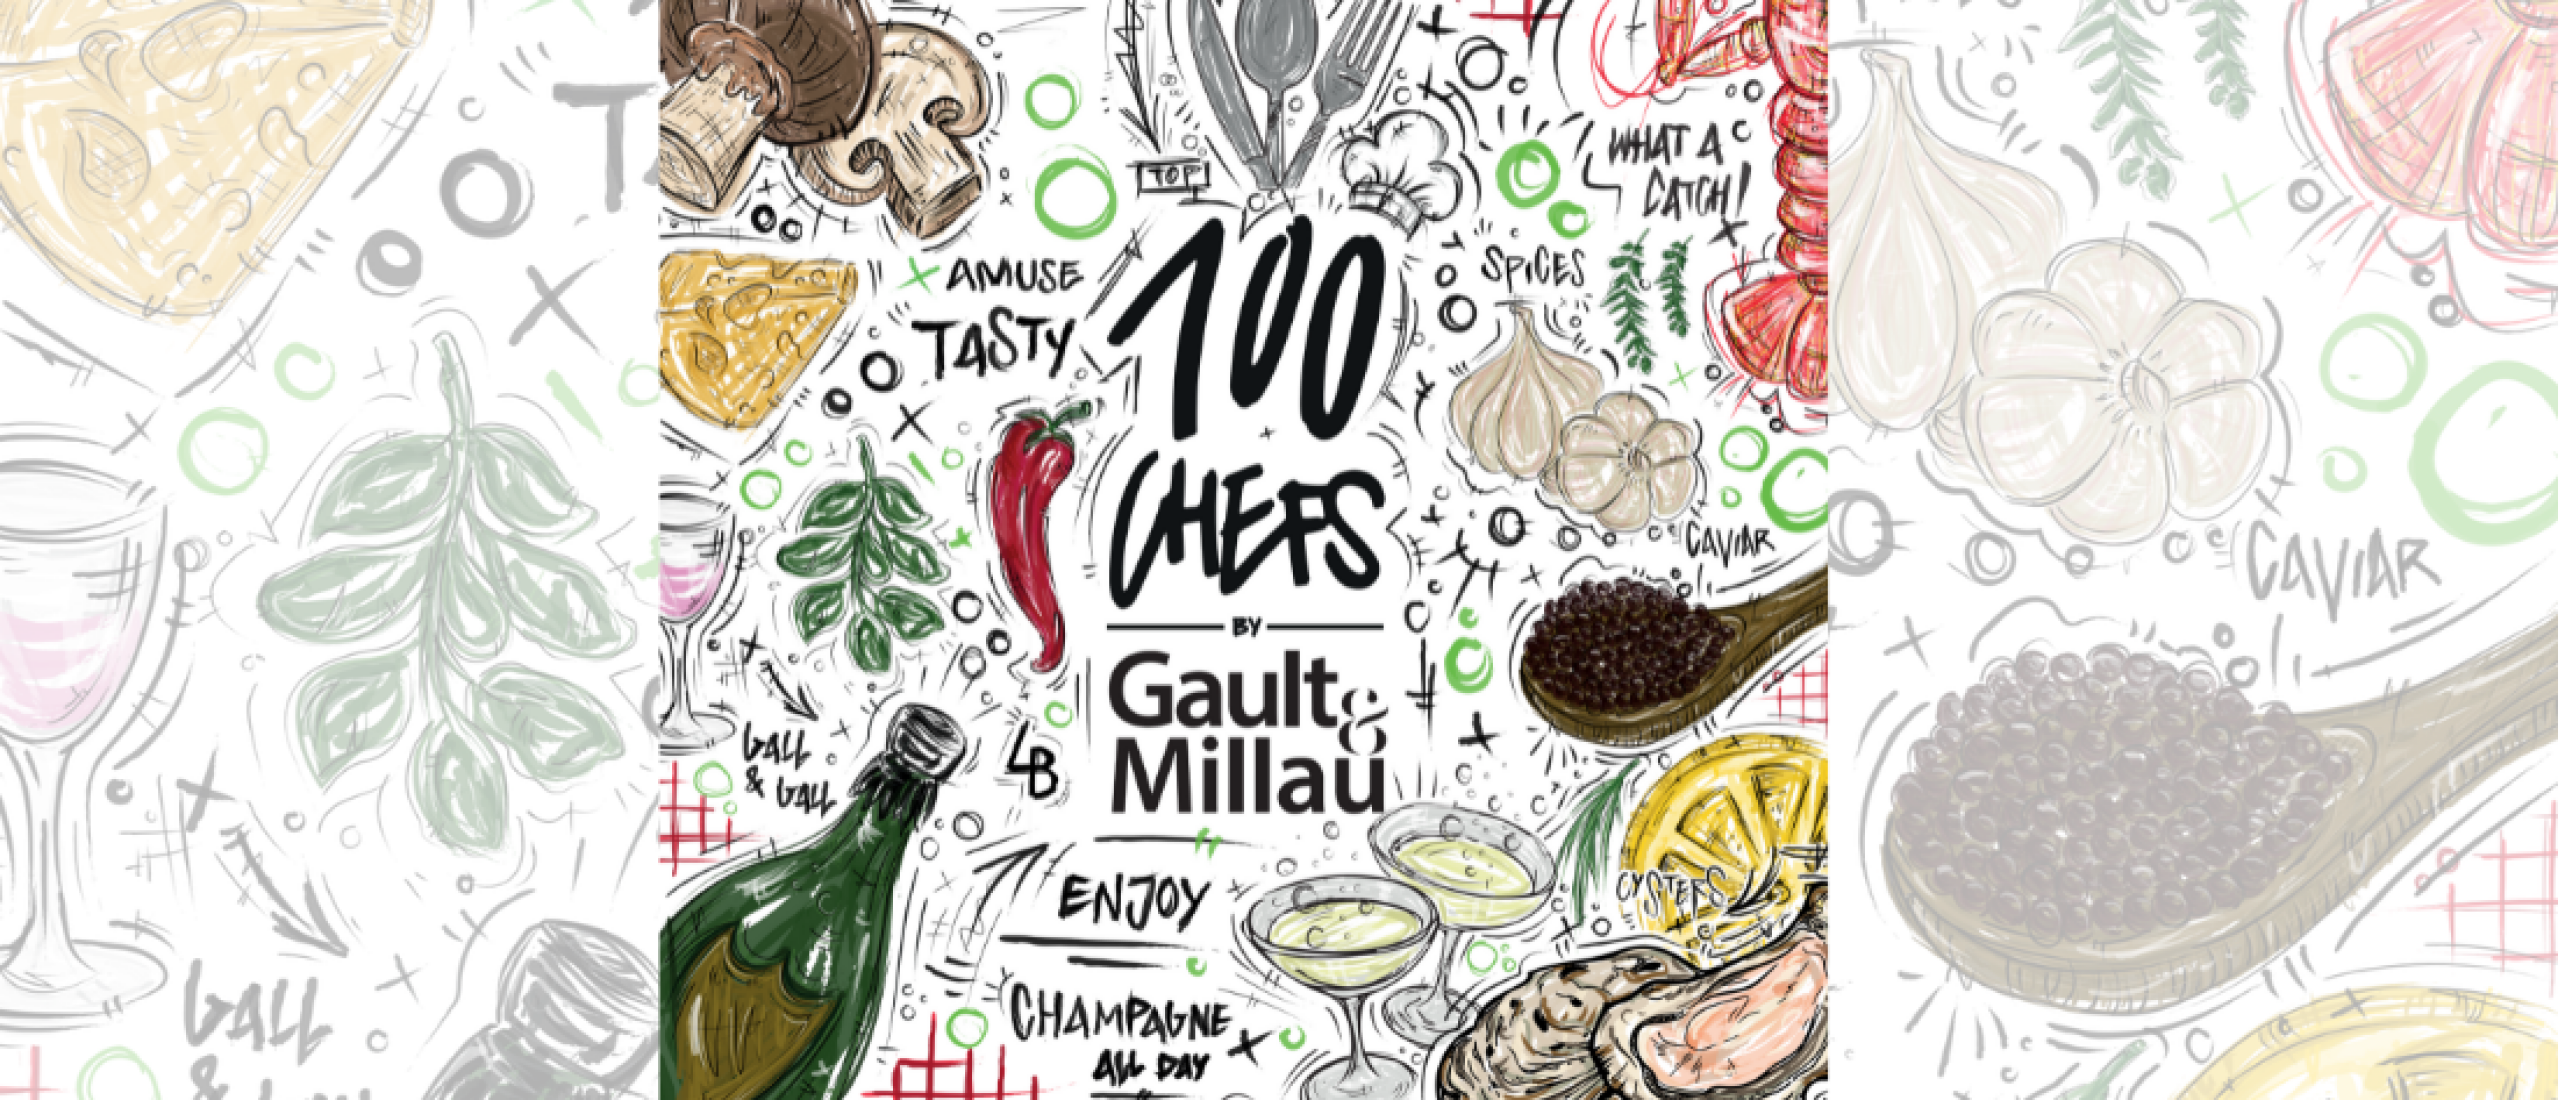 Uniek  culinair evenement: Ontdek 100Chefs by Gault&Millau!